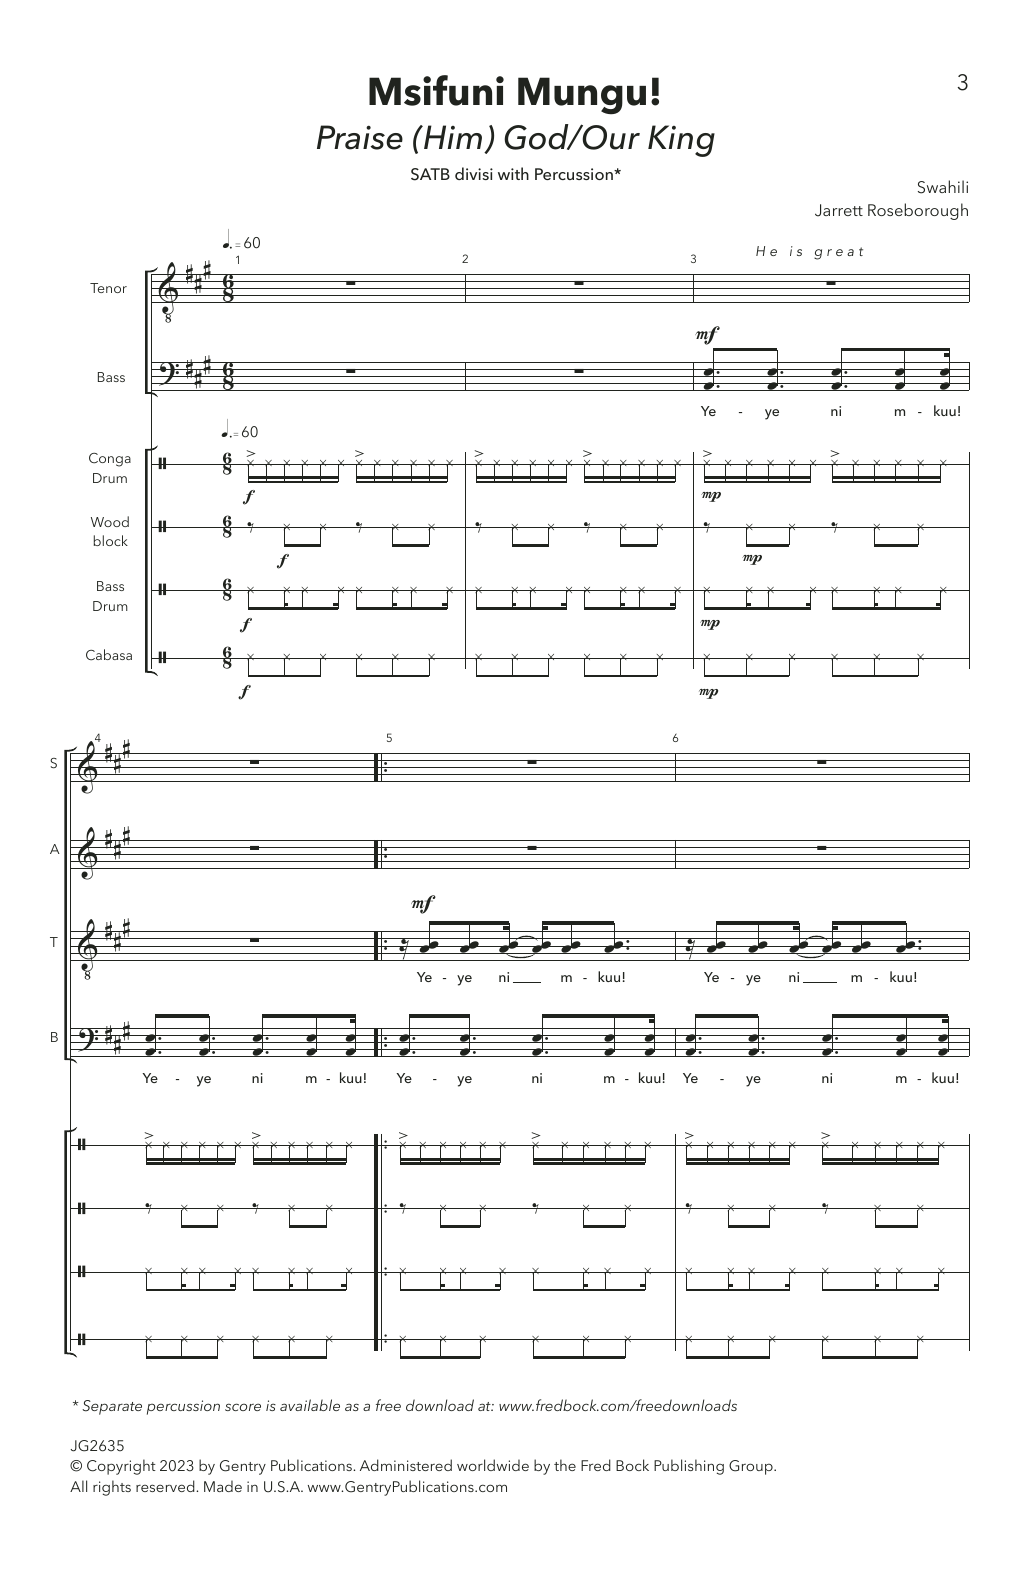 Jarrett Roseborough Msifuni Mungu! (Praise (Him) God/Our King) Sheet Music Notes & Chords for Choir - Download or Print PDF